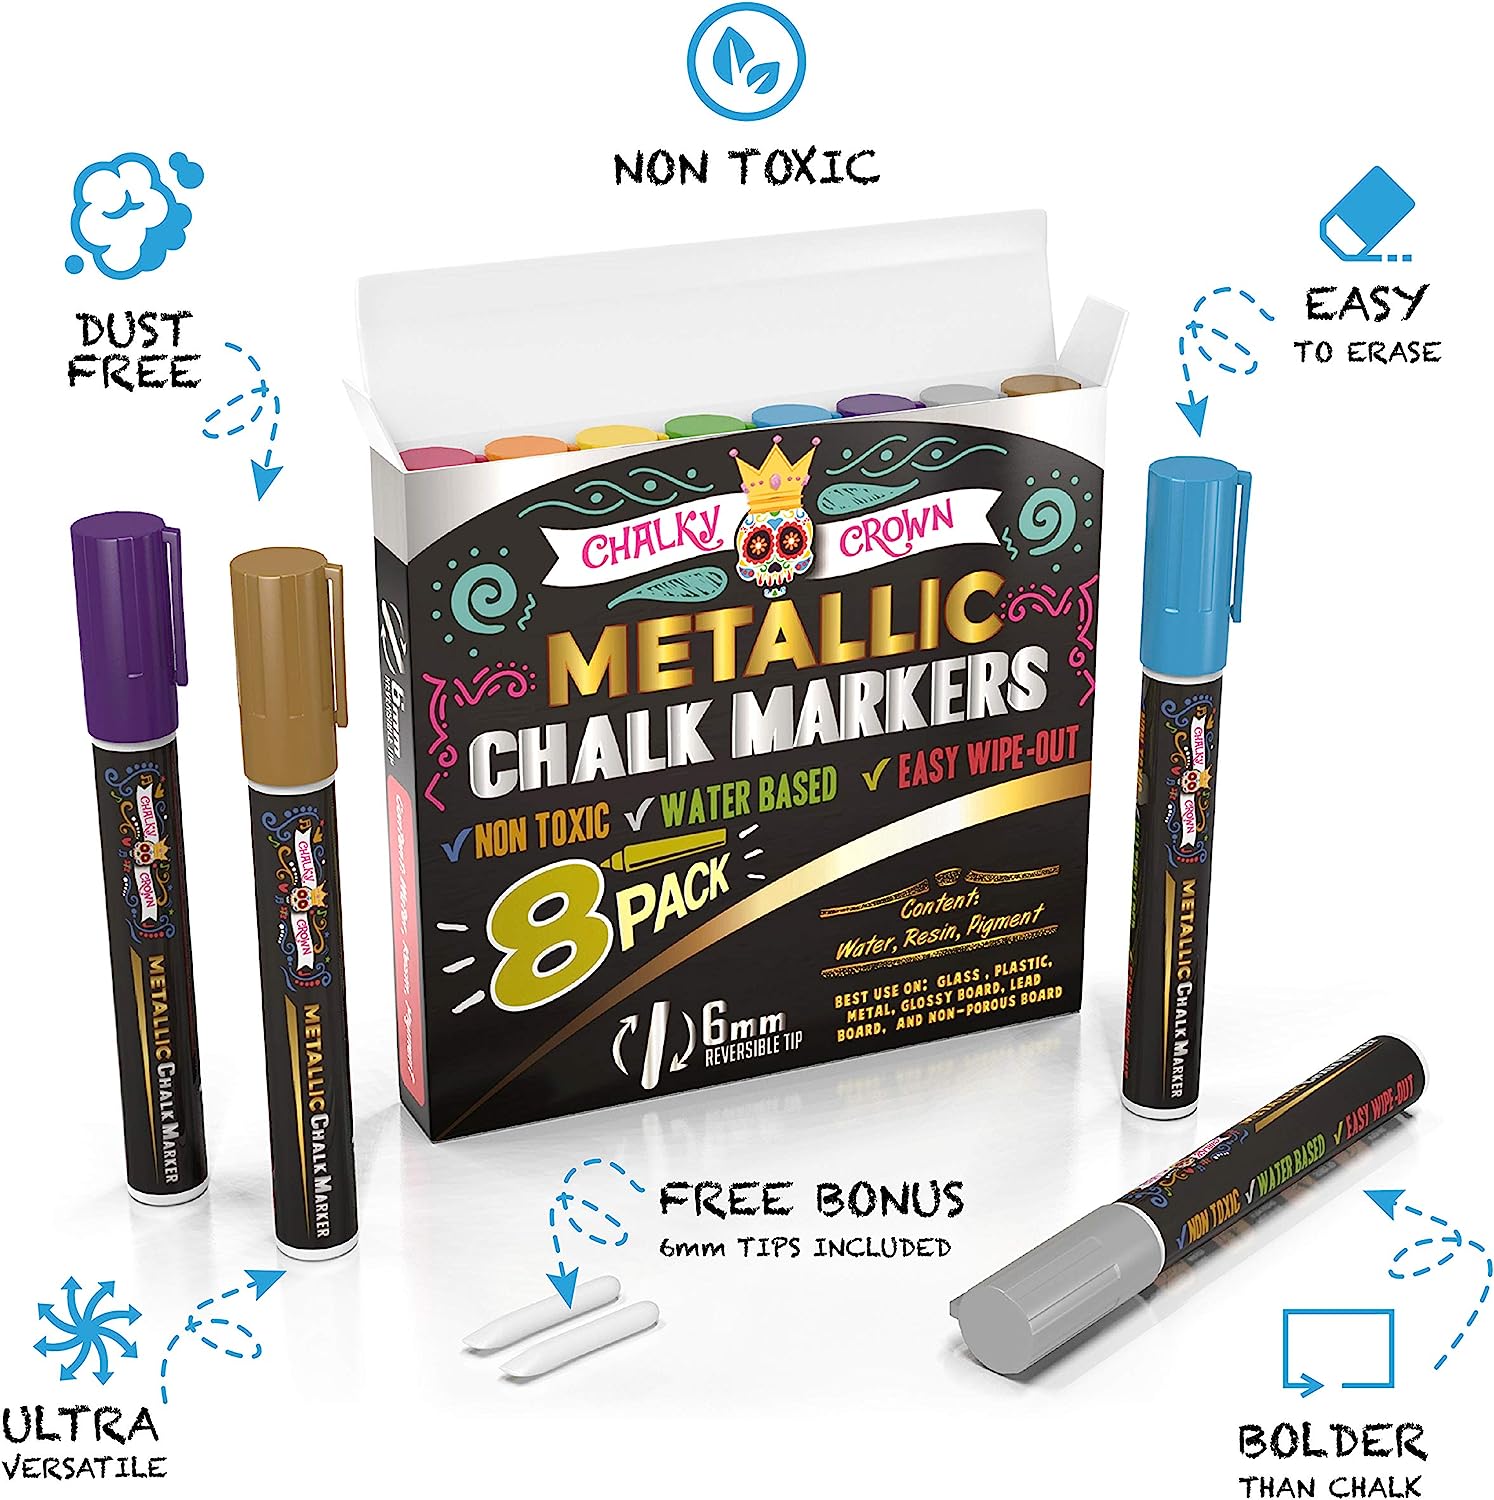 UNI Liquid Chalk Bullet Tip 8 Pack